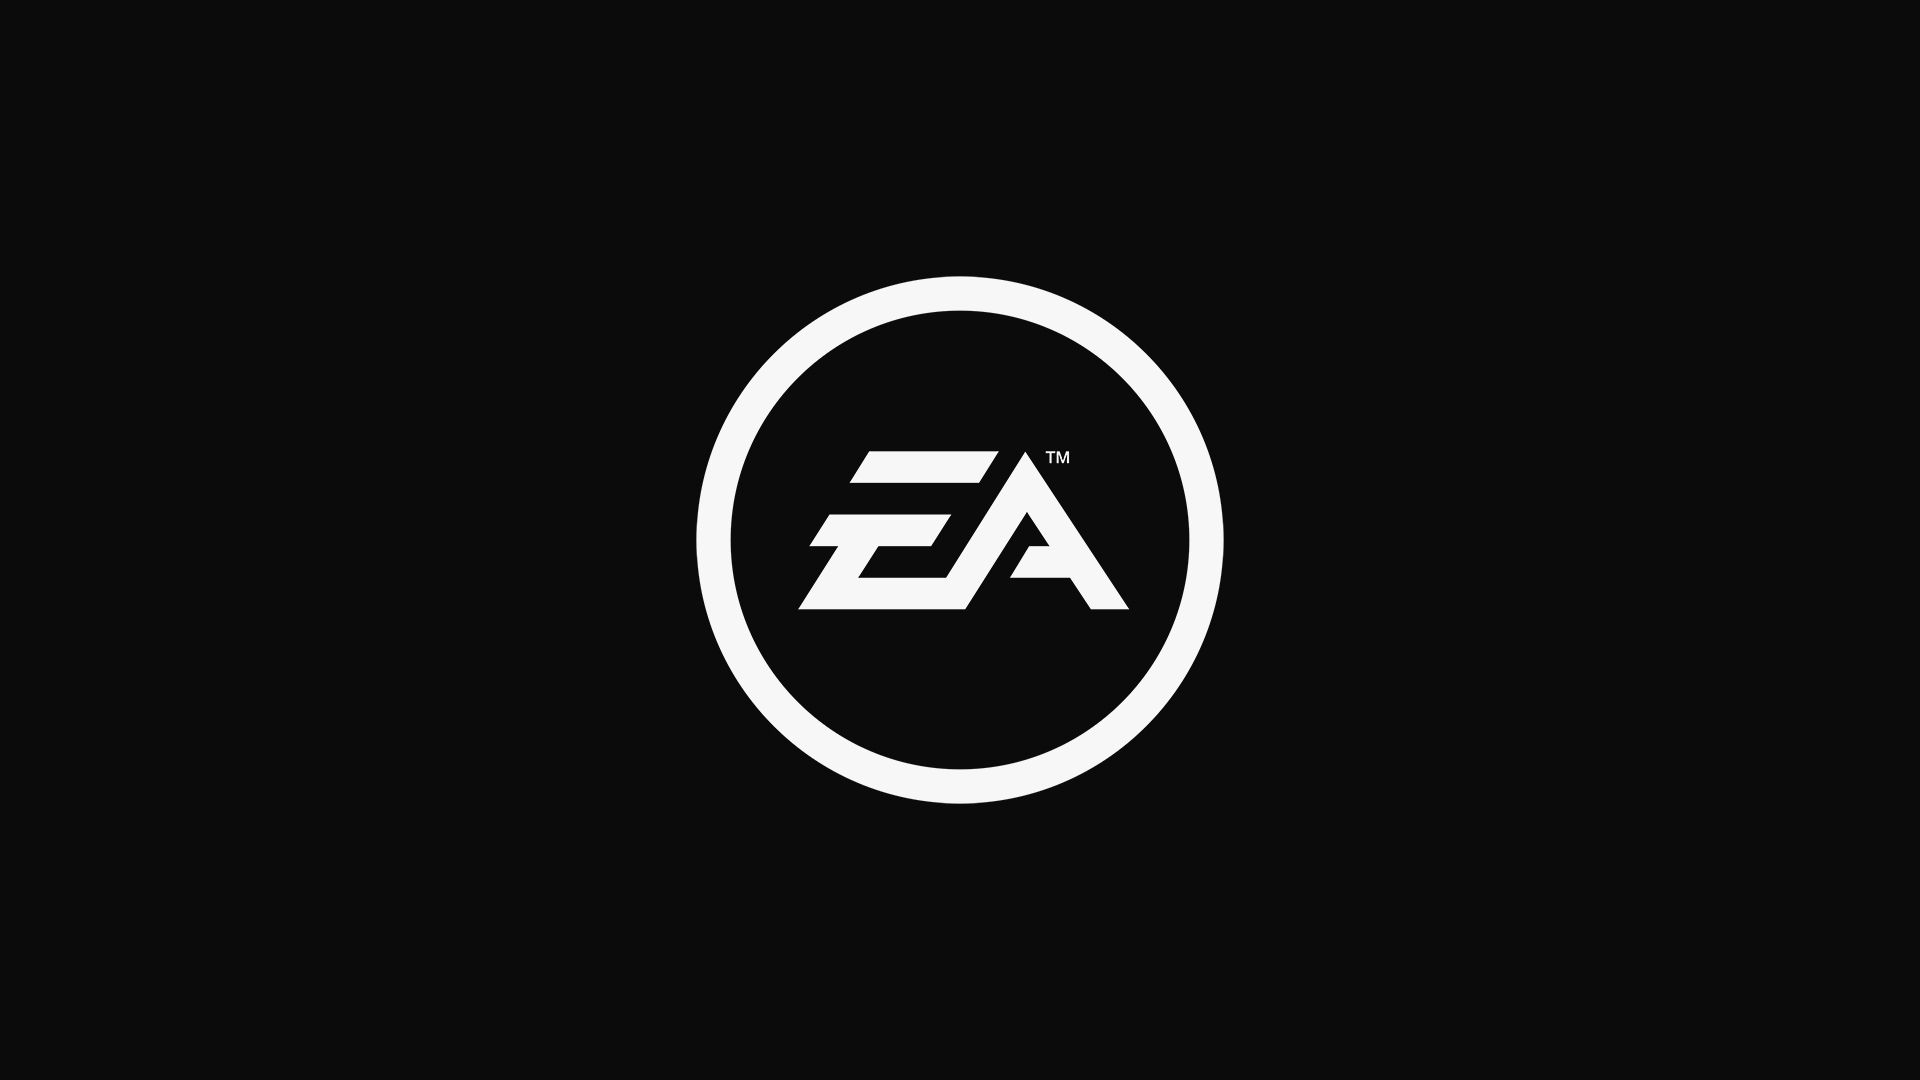 EA logo white black background